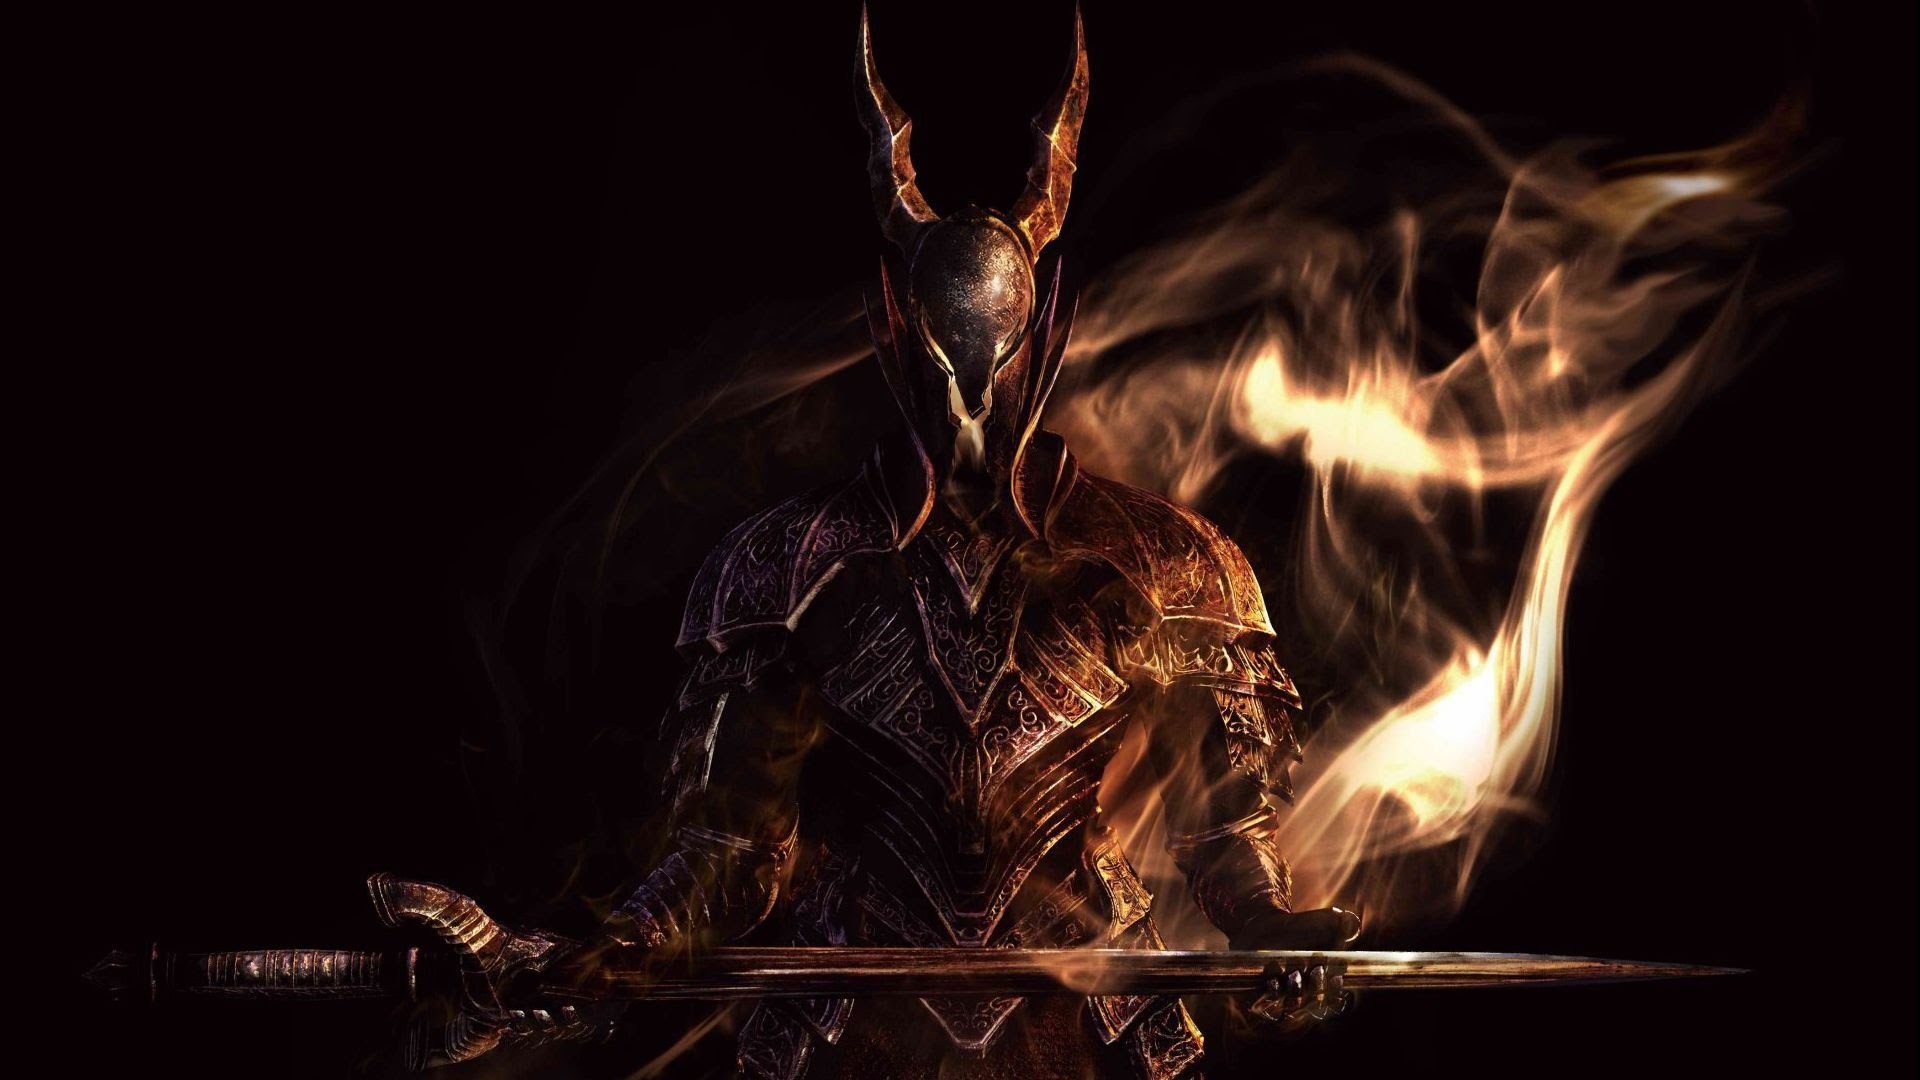 Dark Souls 3 PC SL 121 INVASIONS / PVP Black Knight Cosplay. – YouTube